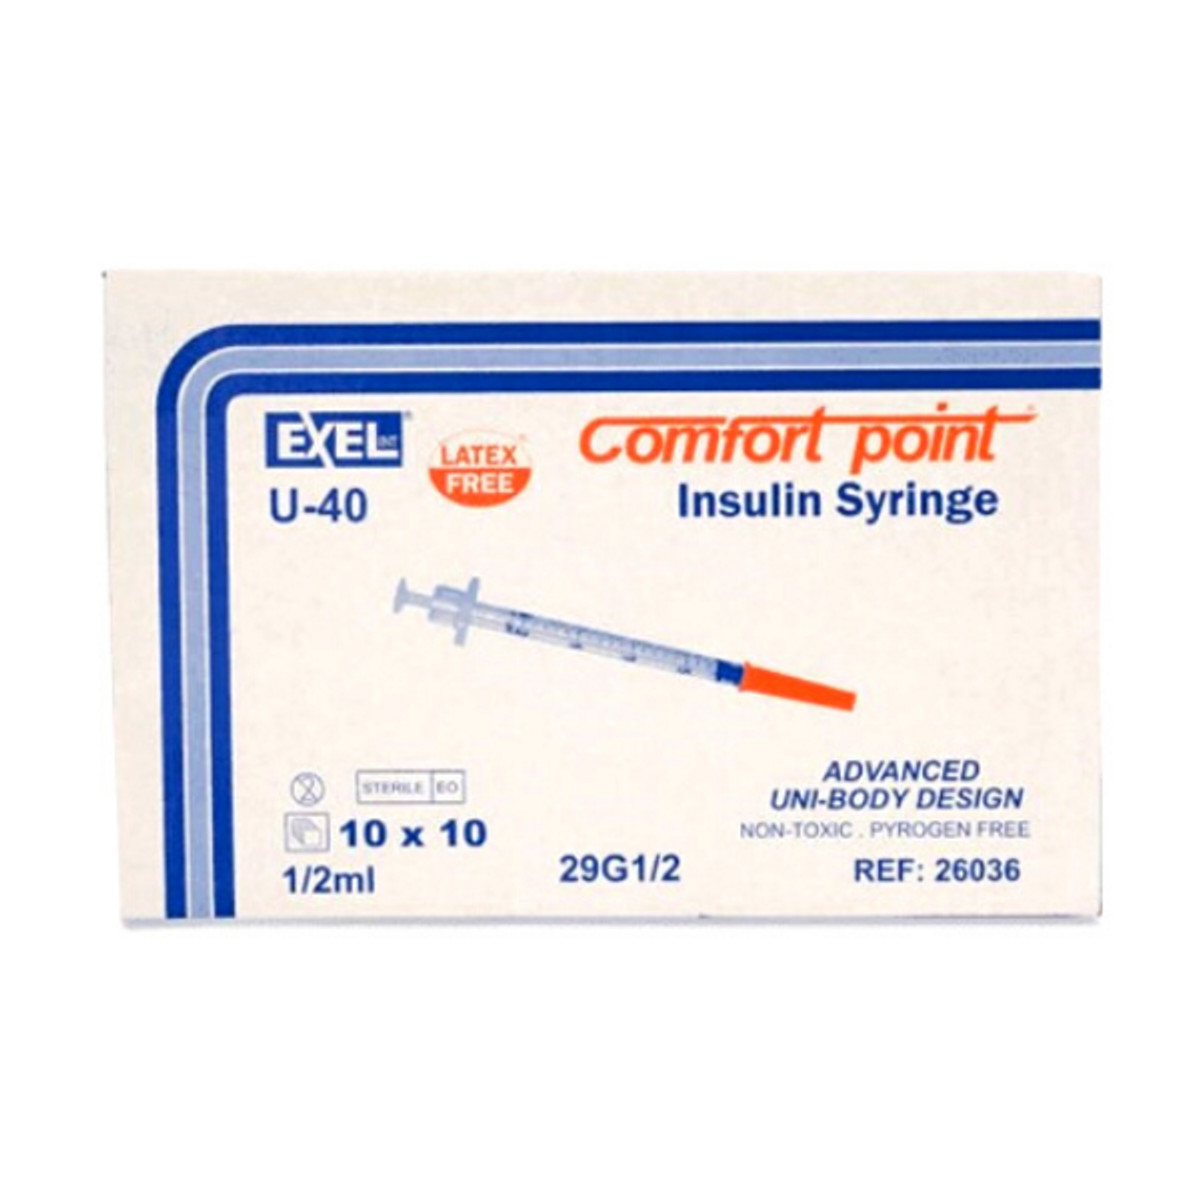 Exel Pet Insulin Syringes, Comfort Point, U-40